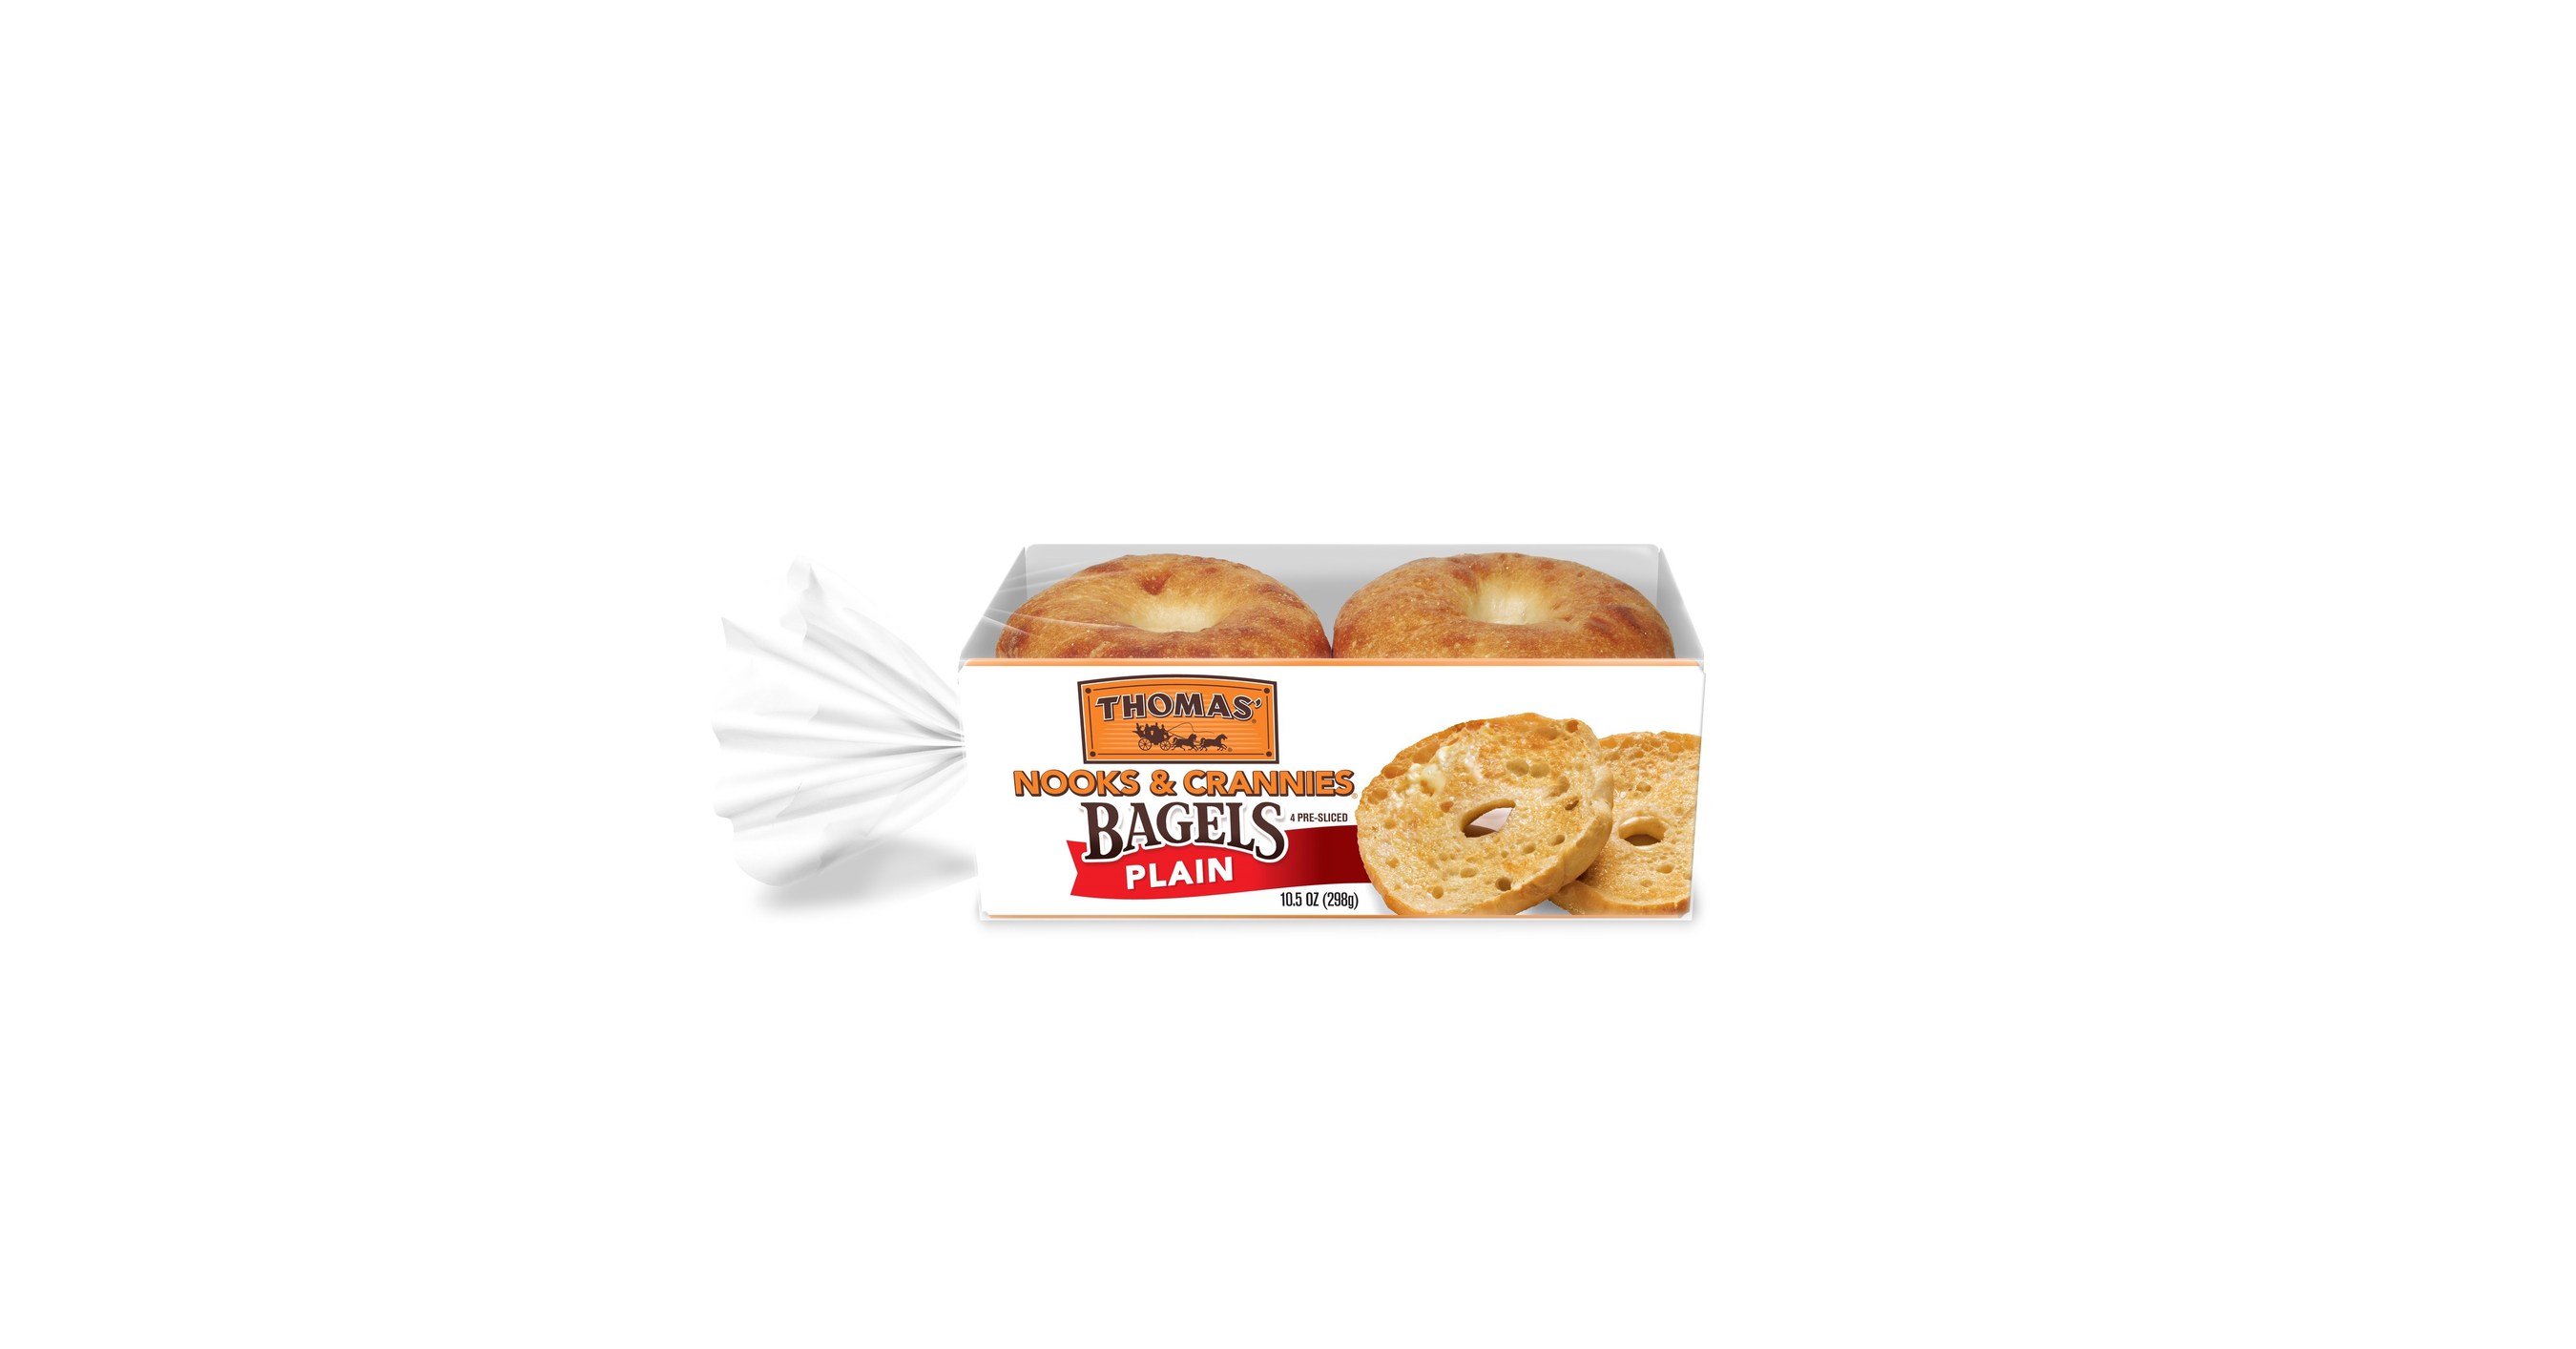 BBU launches Thomas' muffin tops